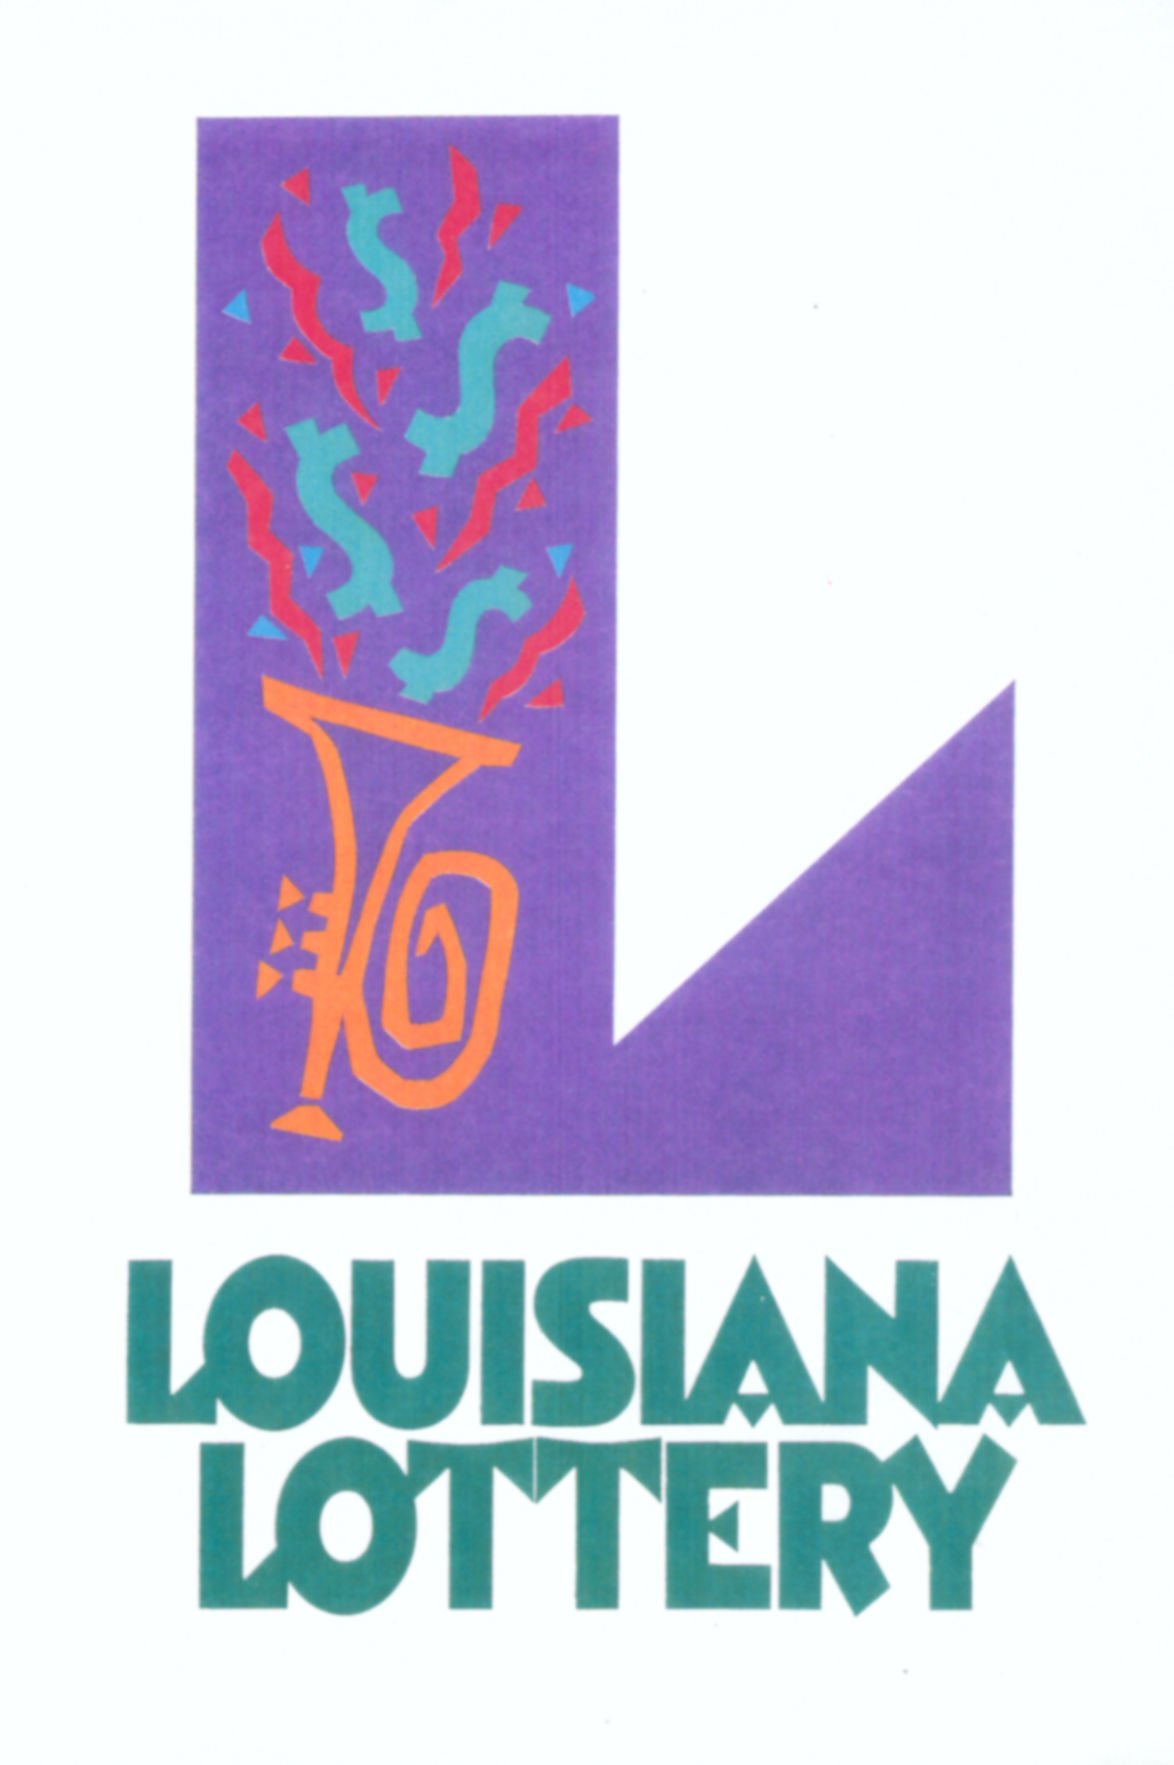 Louisiana lottery baton rouge - www.bagssaleusa.com